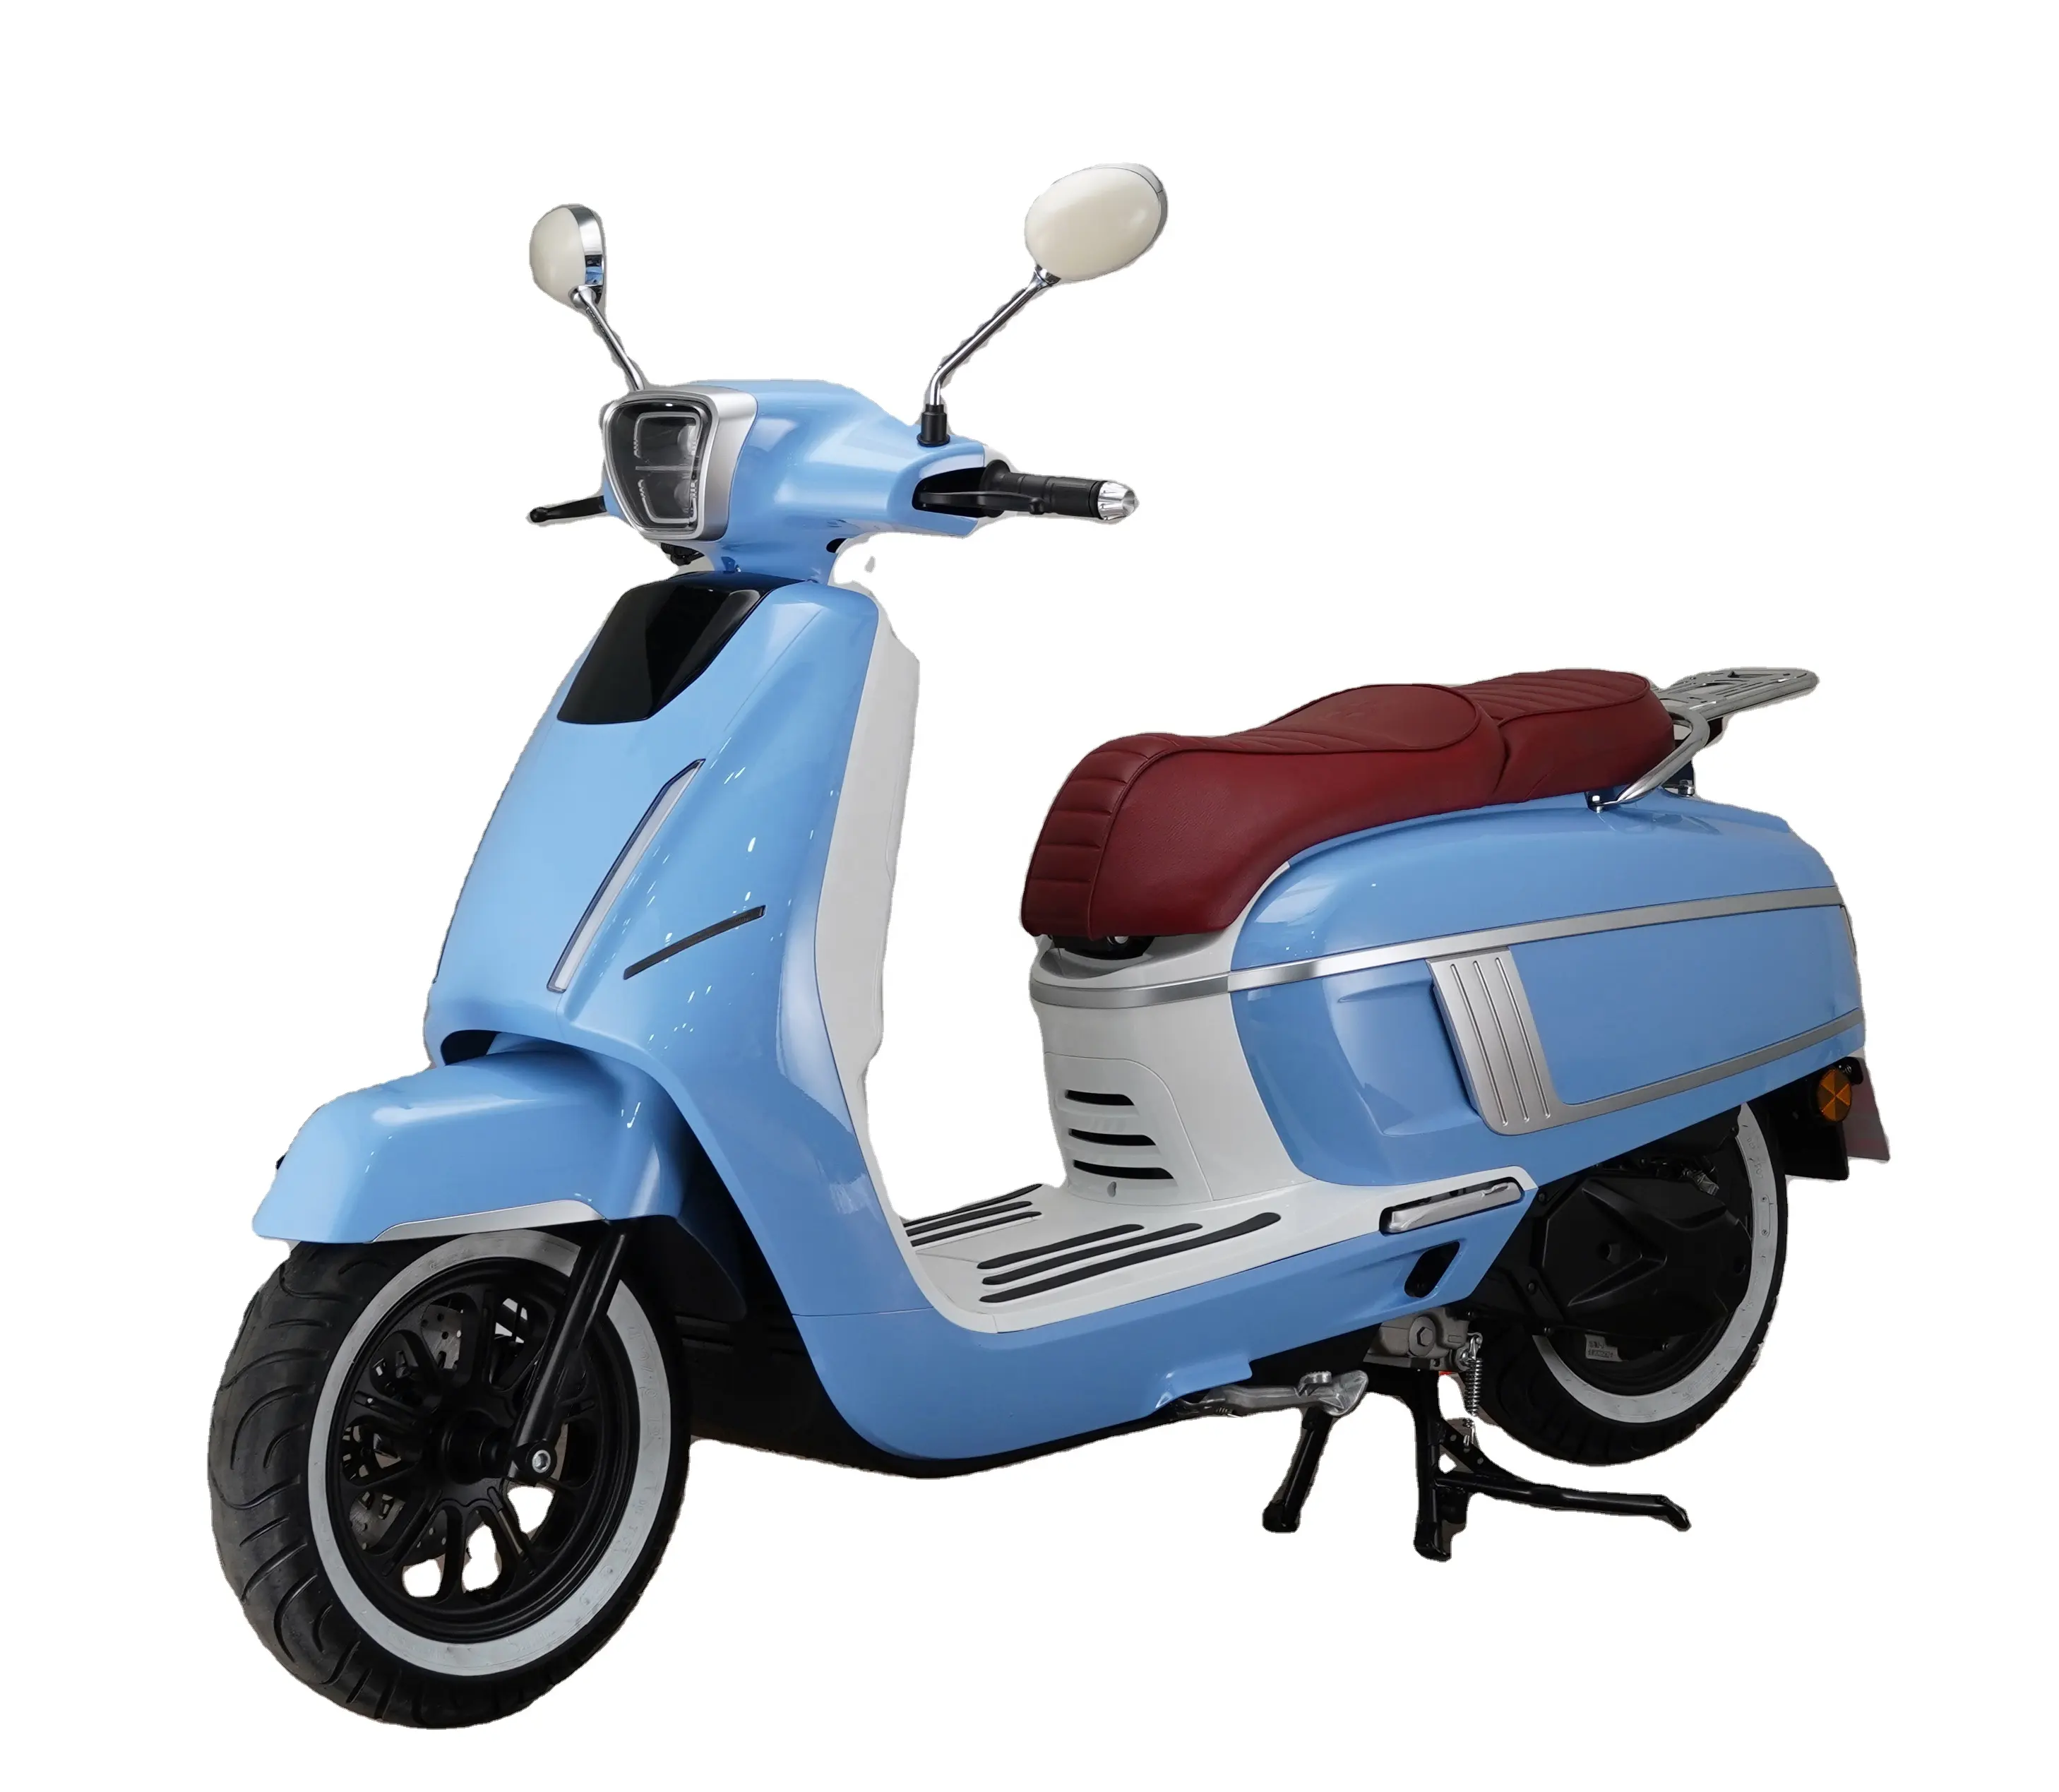 LISA 2 / EEC COC EURO 5 / 50cc 125cc 150cc adulto gas scooter ciclomotore moto benzina retrò cinese benzina